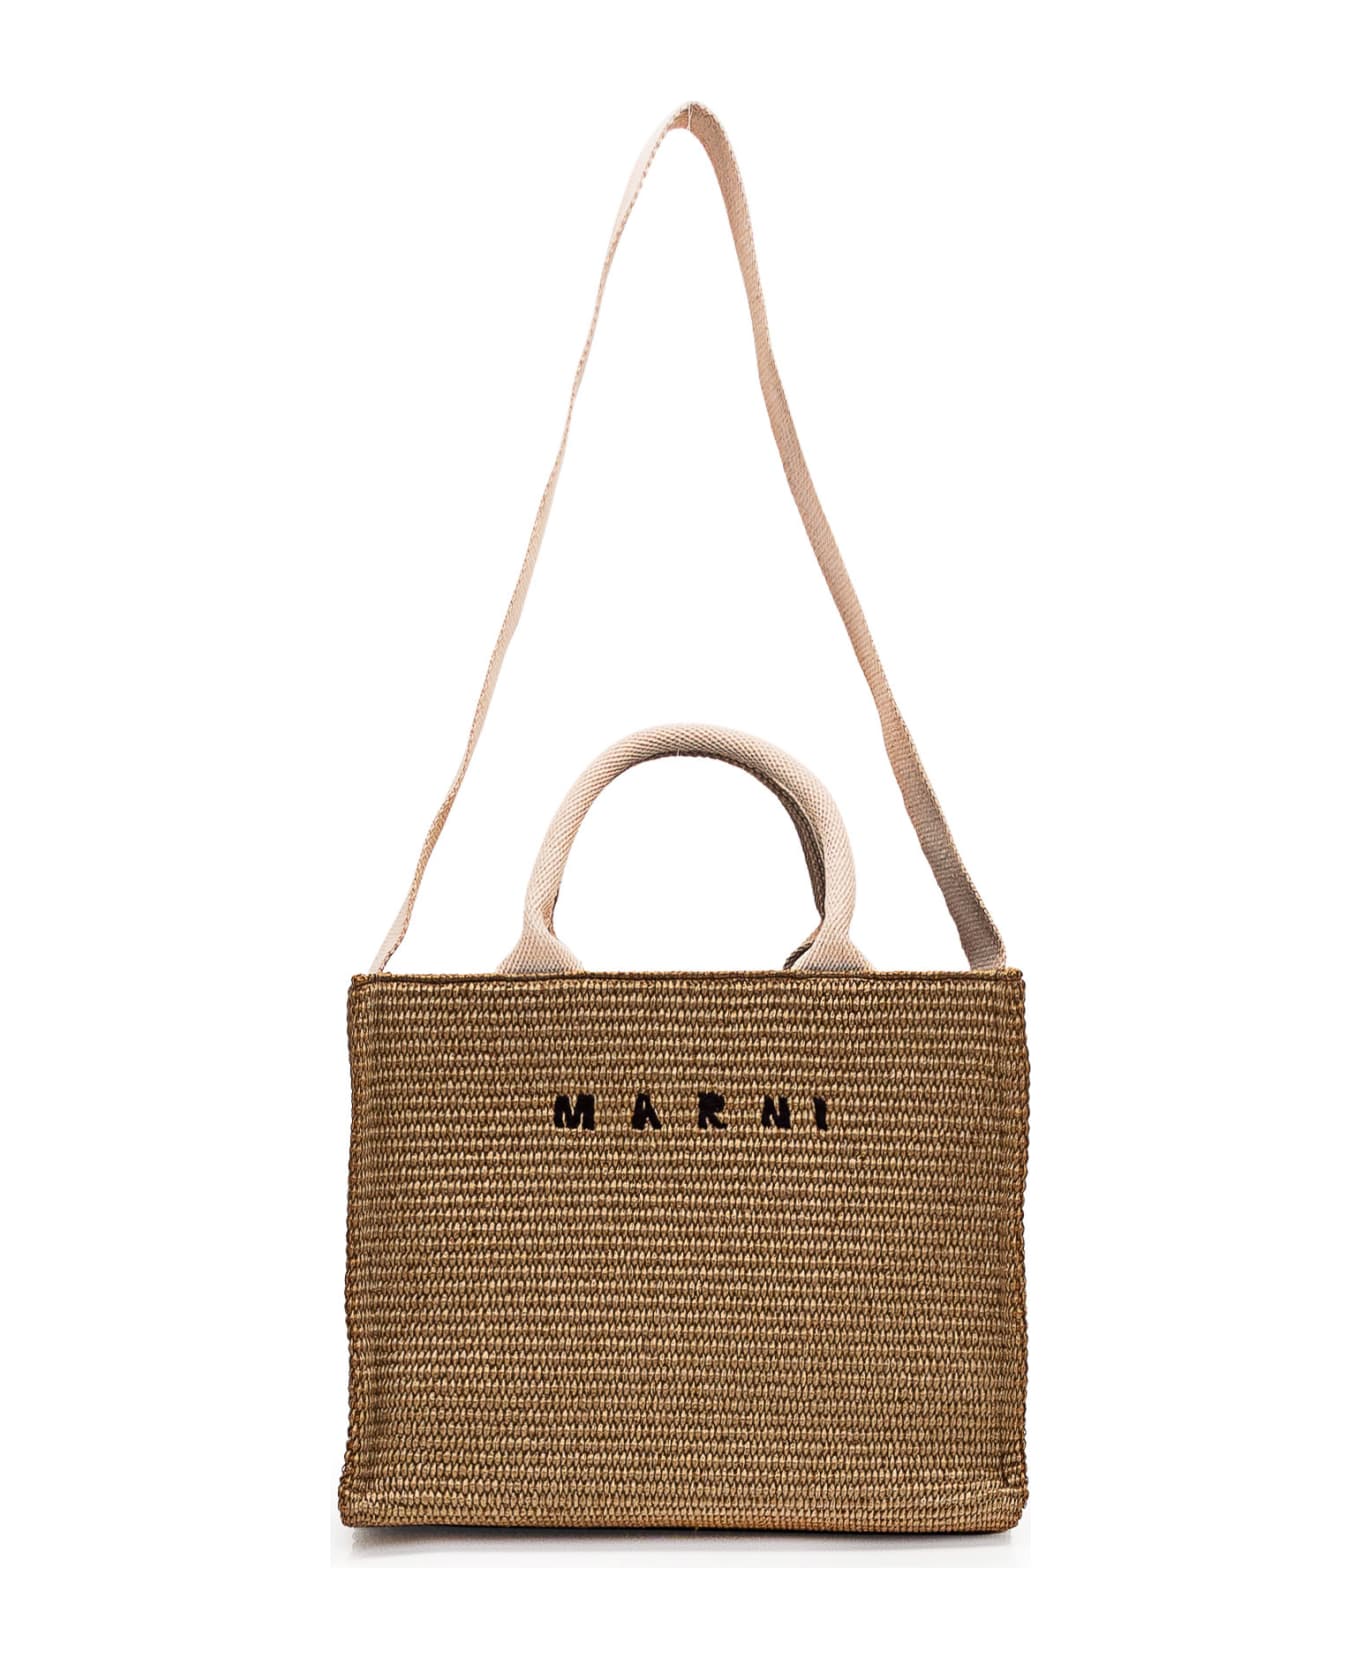 Marni Small Bag In Rafia - RAW SIENNA/NATURAL